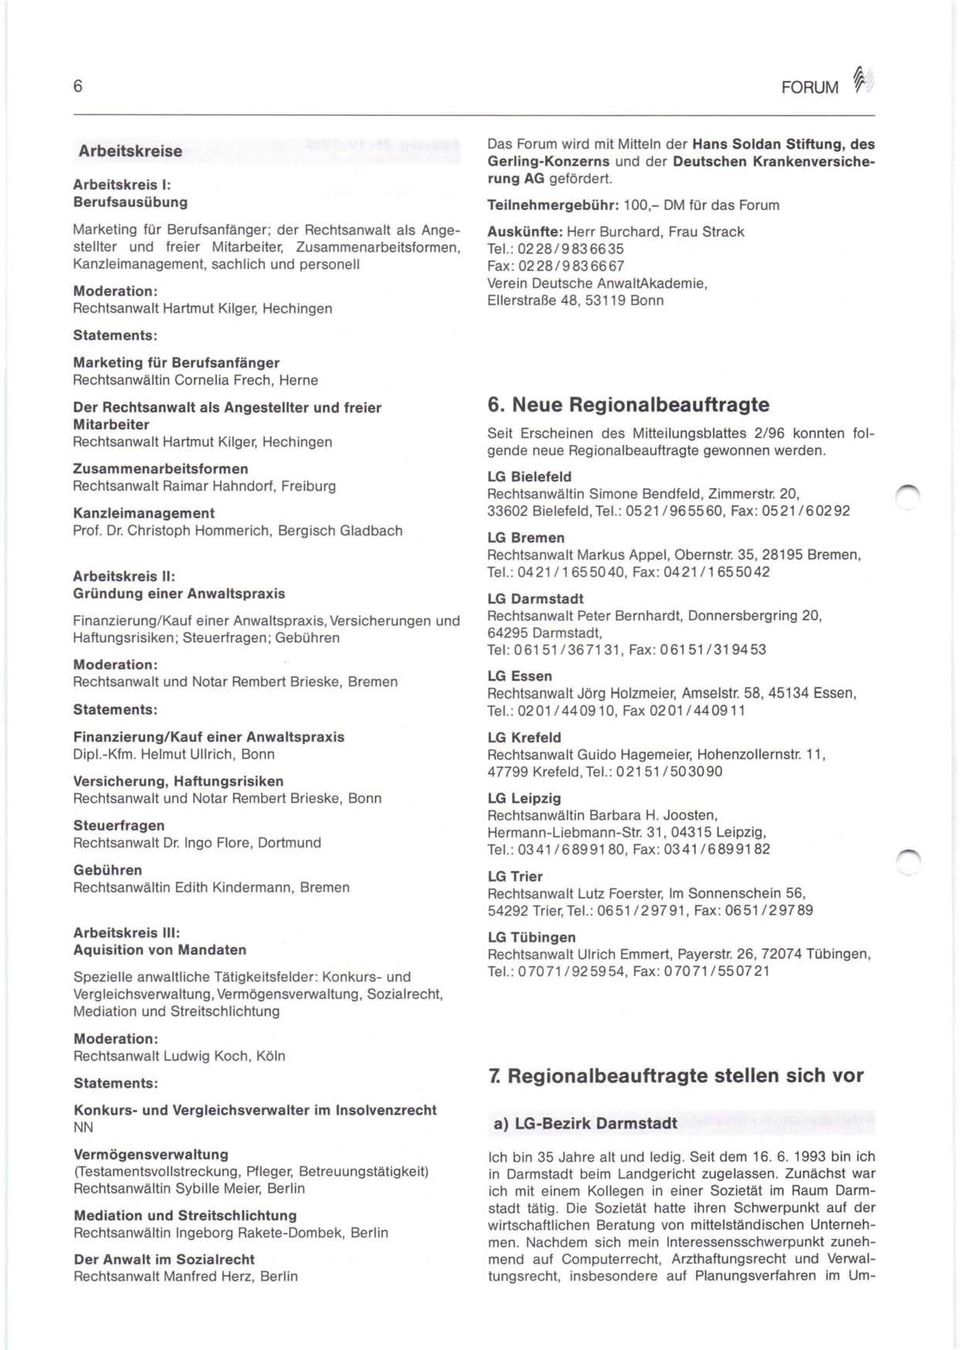 Rechtsanwalt Hartmut Kilger, Hechingen Zusammenarbeitsformen Rechtsanwalt Raimar Hahndorf, Freiburg Kanzleimanagement Prof. Dr.